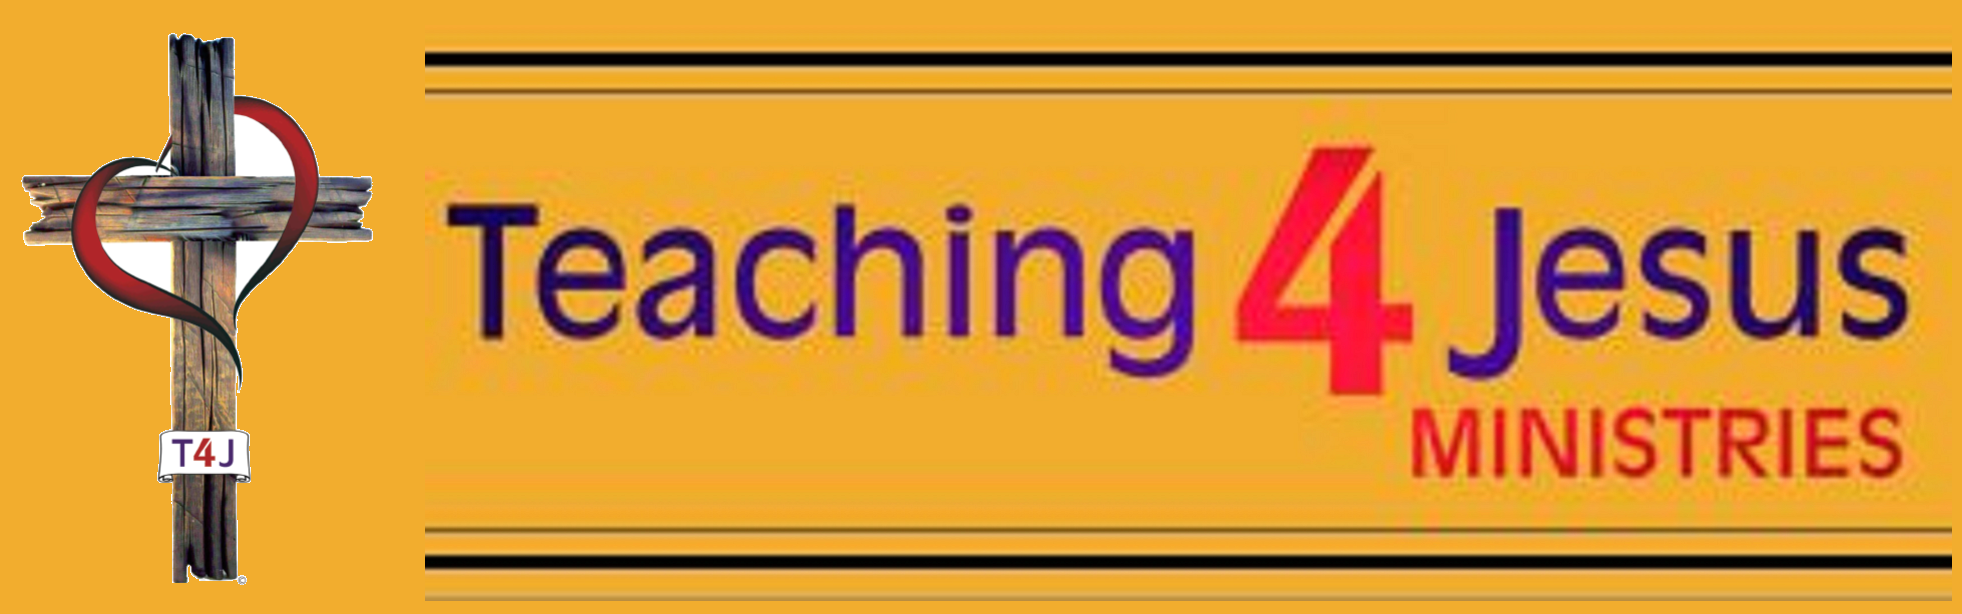 Teaching4Jesus Ministries logo